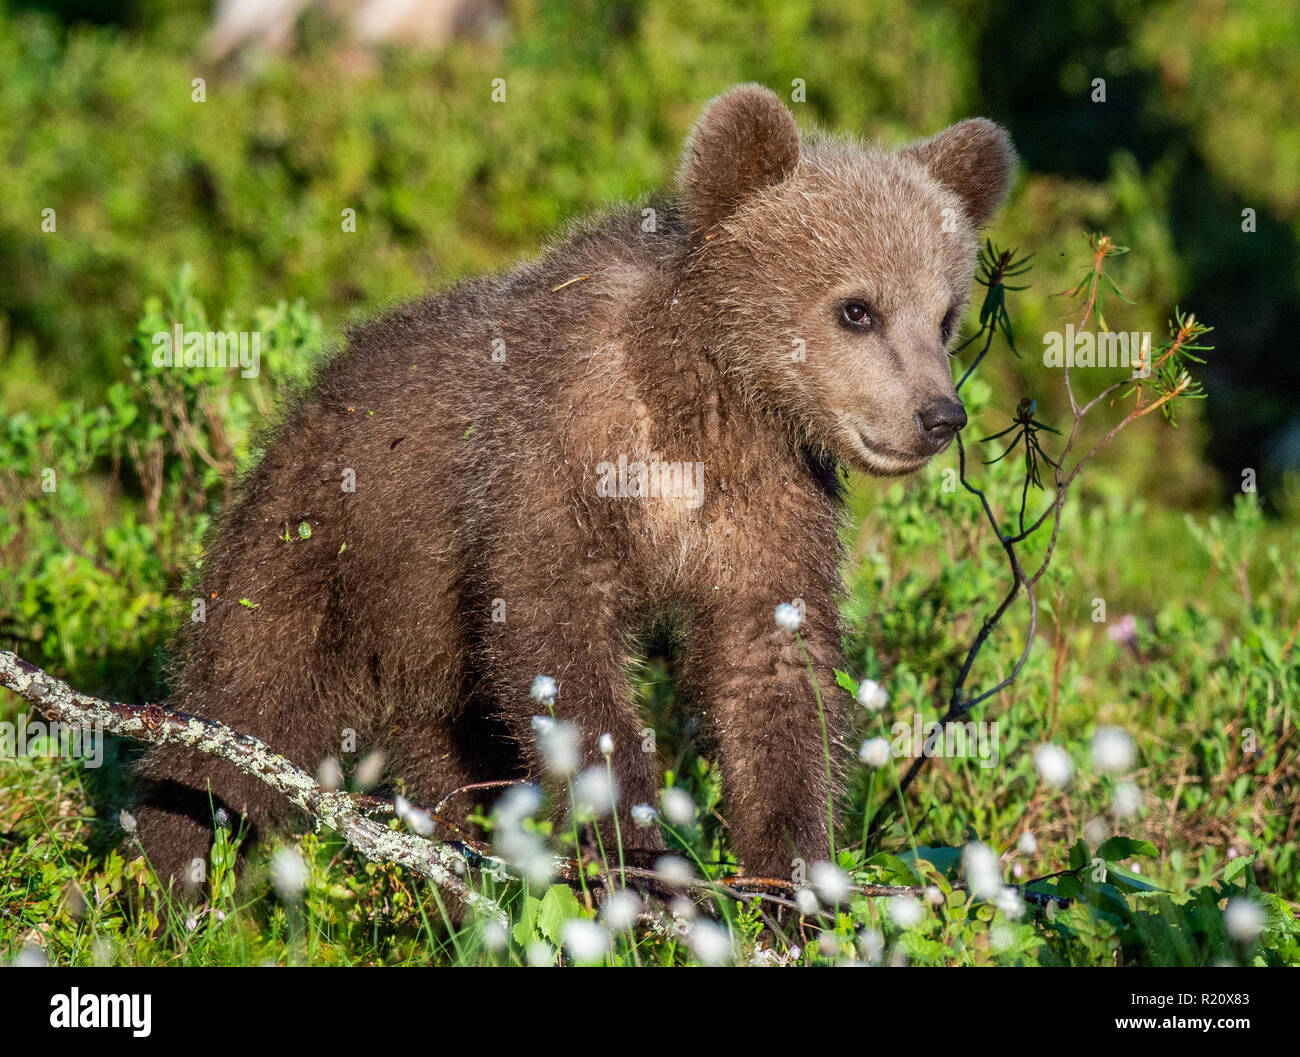 Brown Bear Cub in estate foresta. Nome scientifico: Ursus arctos. Verde naturale dello sfondo. Habitat naturale. Foto Stock